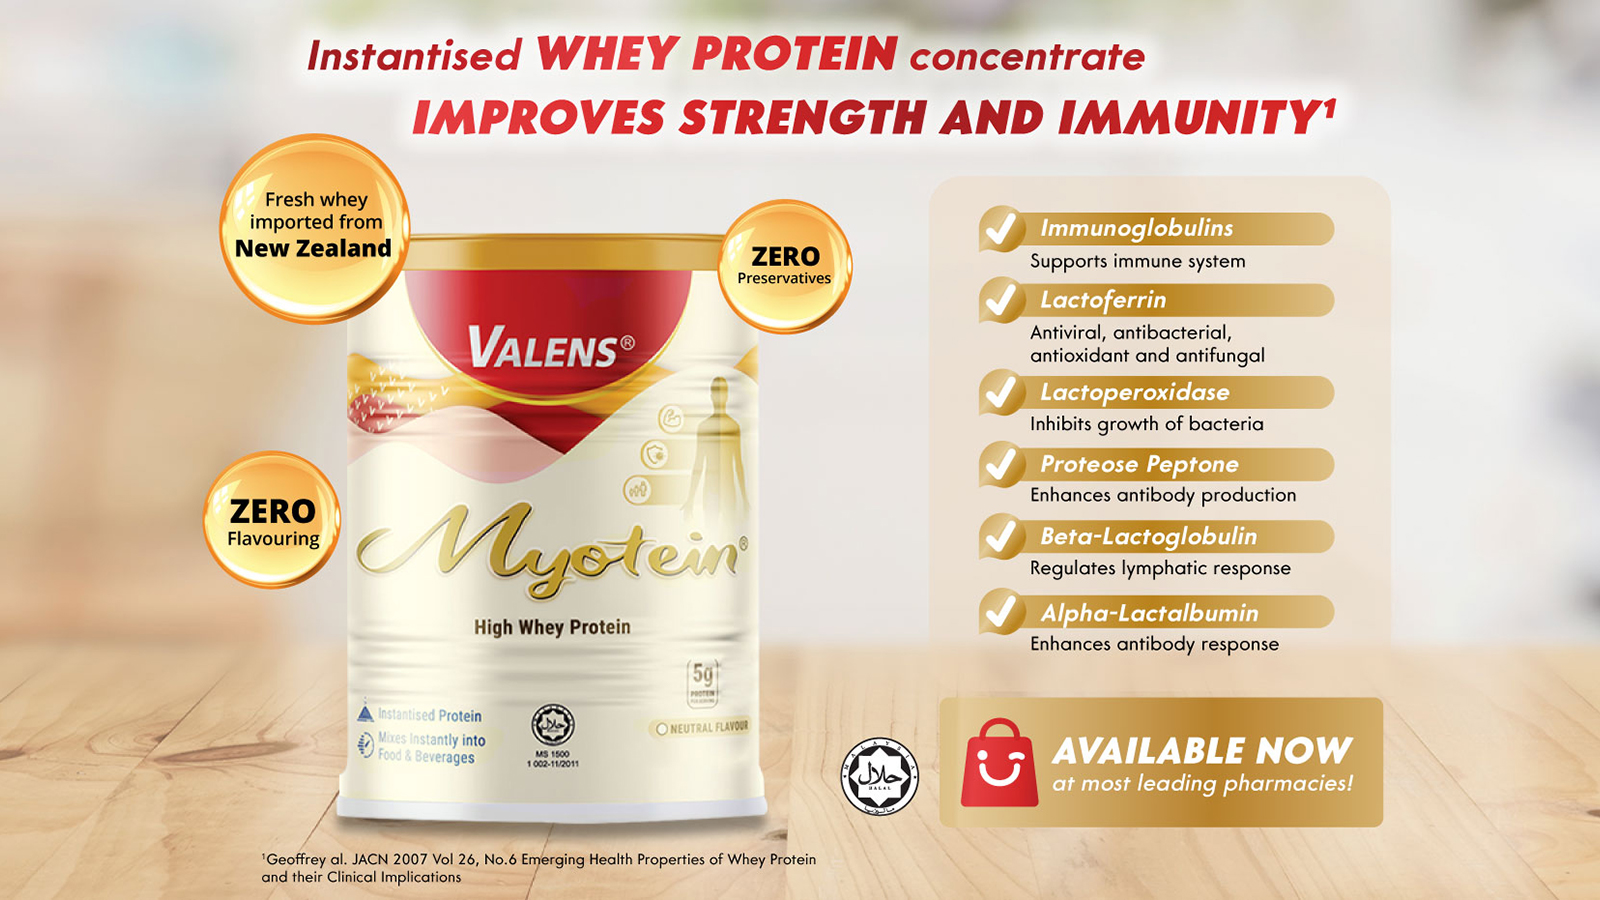 Myotein Malaysia | High quality whey protein supplement in Malaysia | Best Halal whey protein supplement in Malaysia